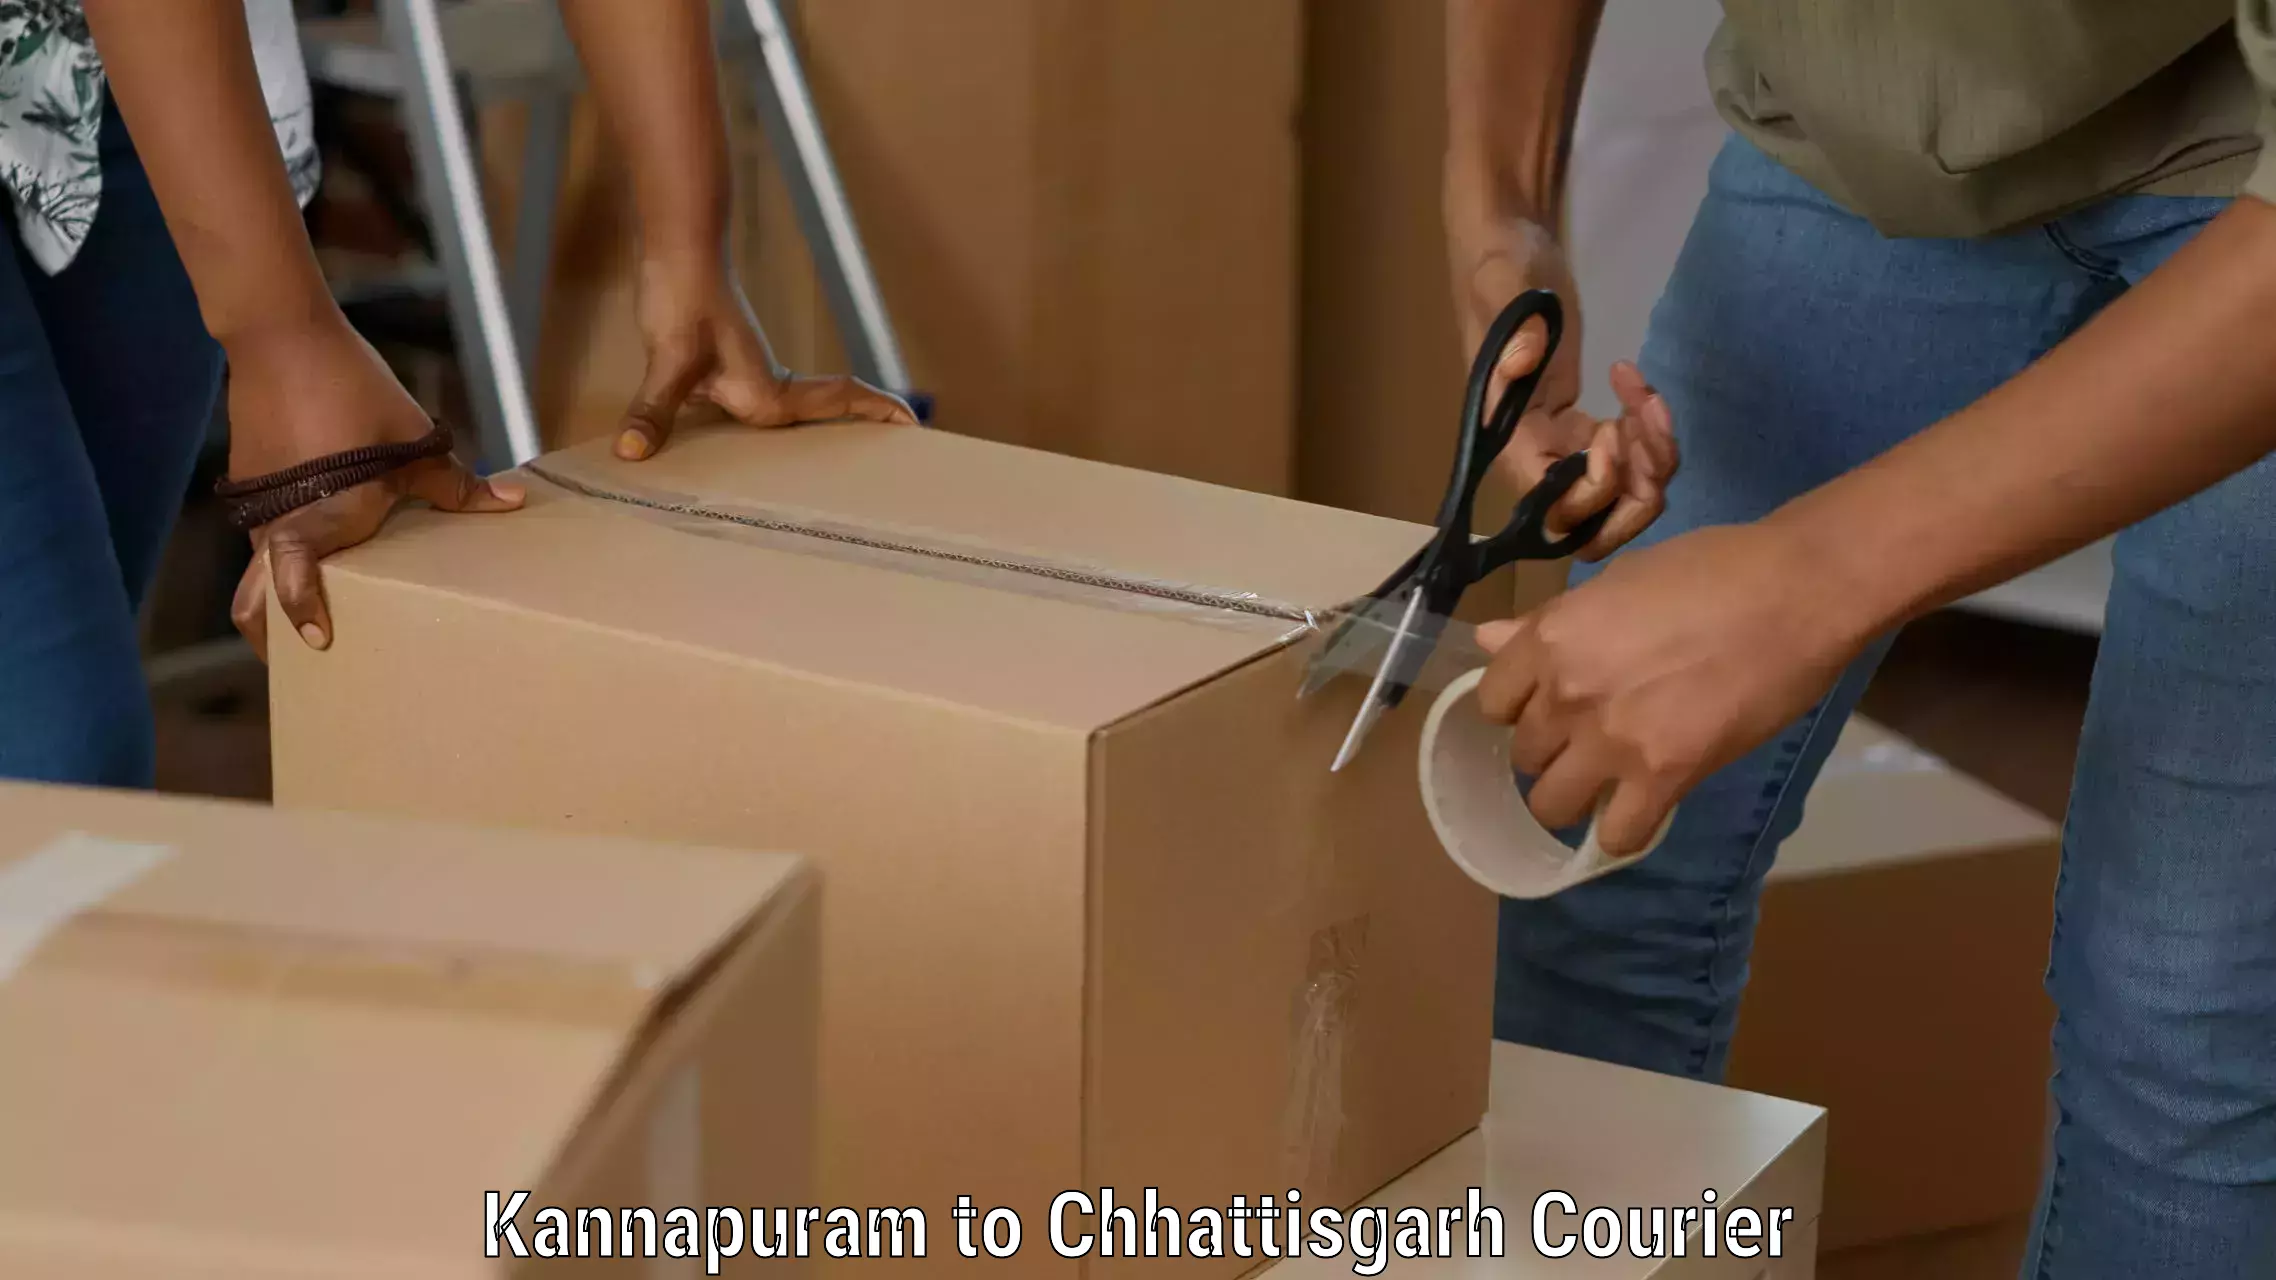 Customizable delivery plans Kannapuram to Patna Chhattisgarh